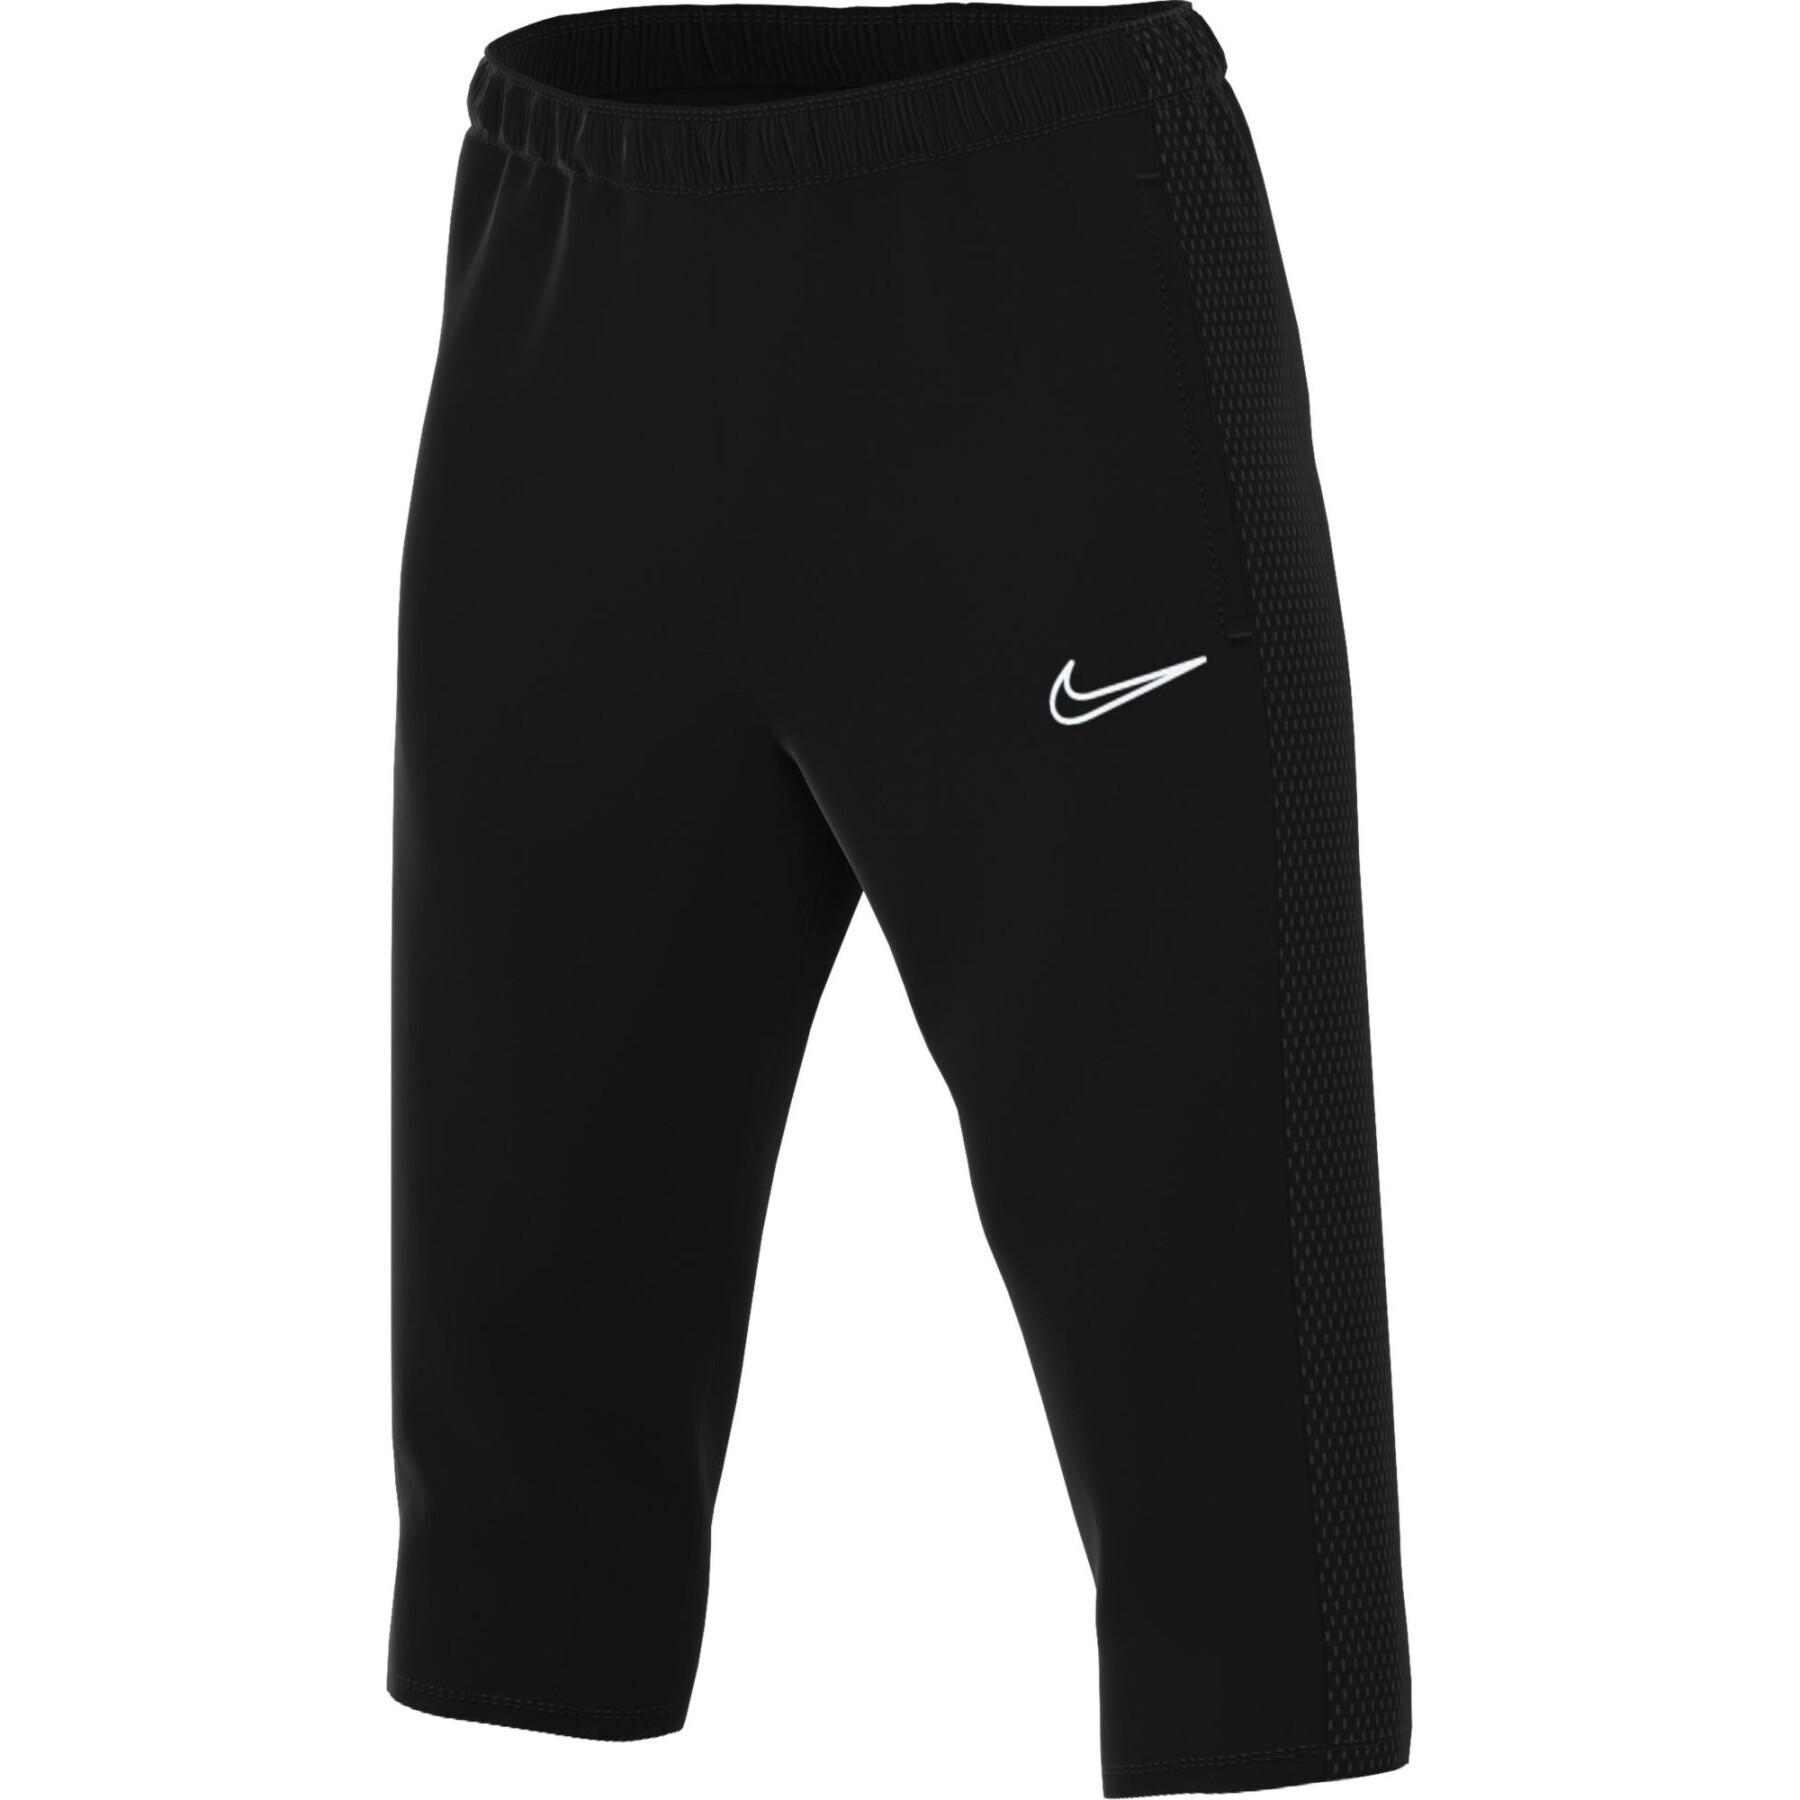 Jogging 3/4 Dri-Fit Academy - Nike Brands - Volleyball wear